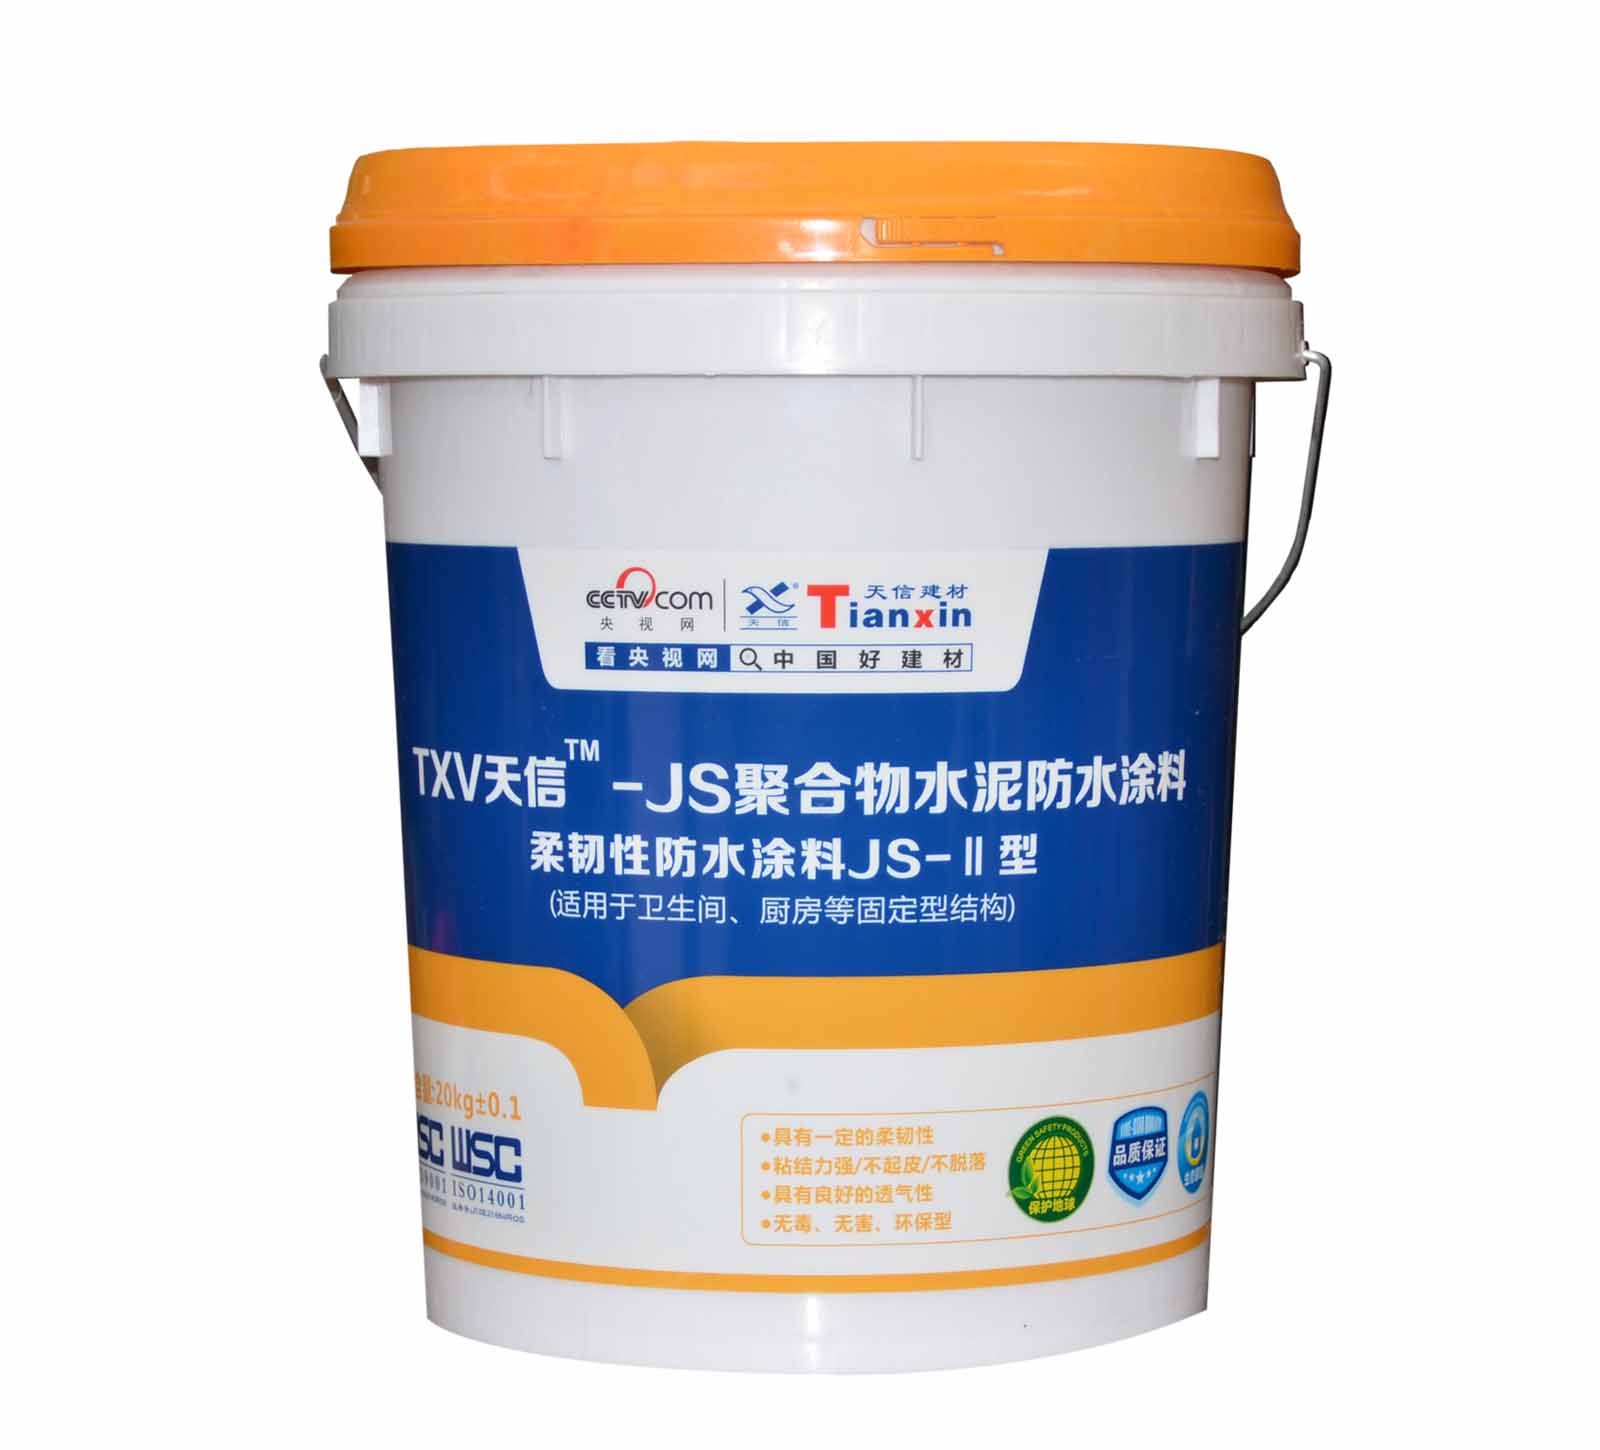 JS聚合物水泥涂料 柔韧性涂料JS-II型